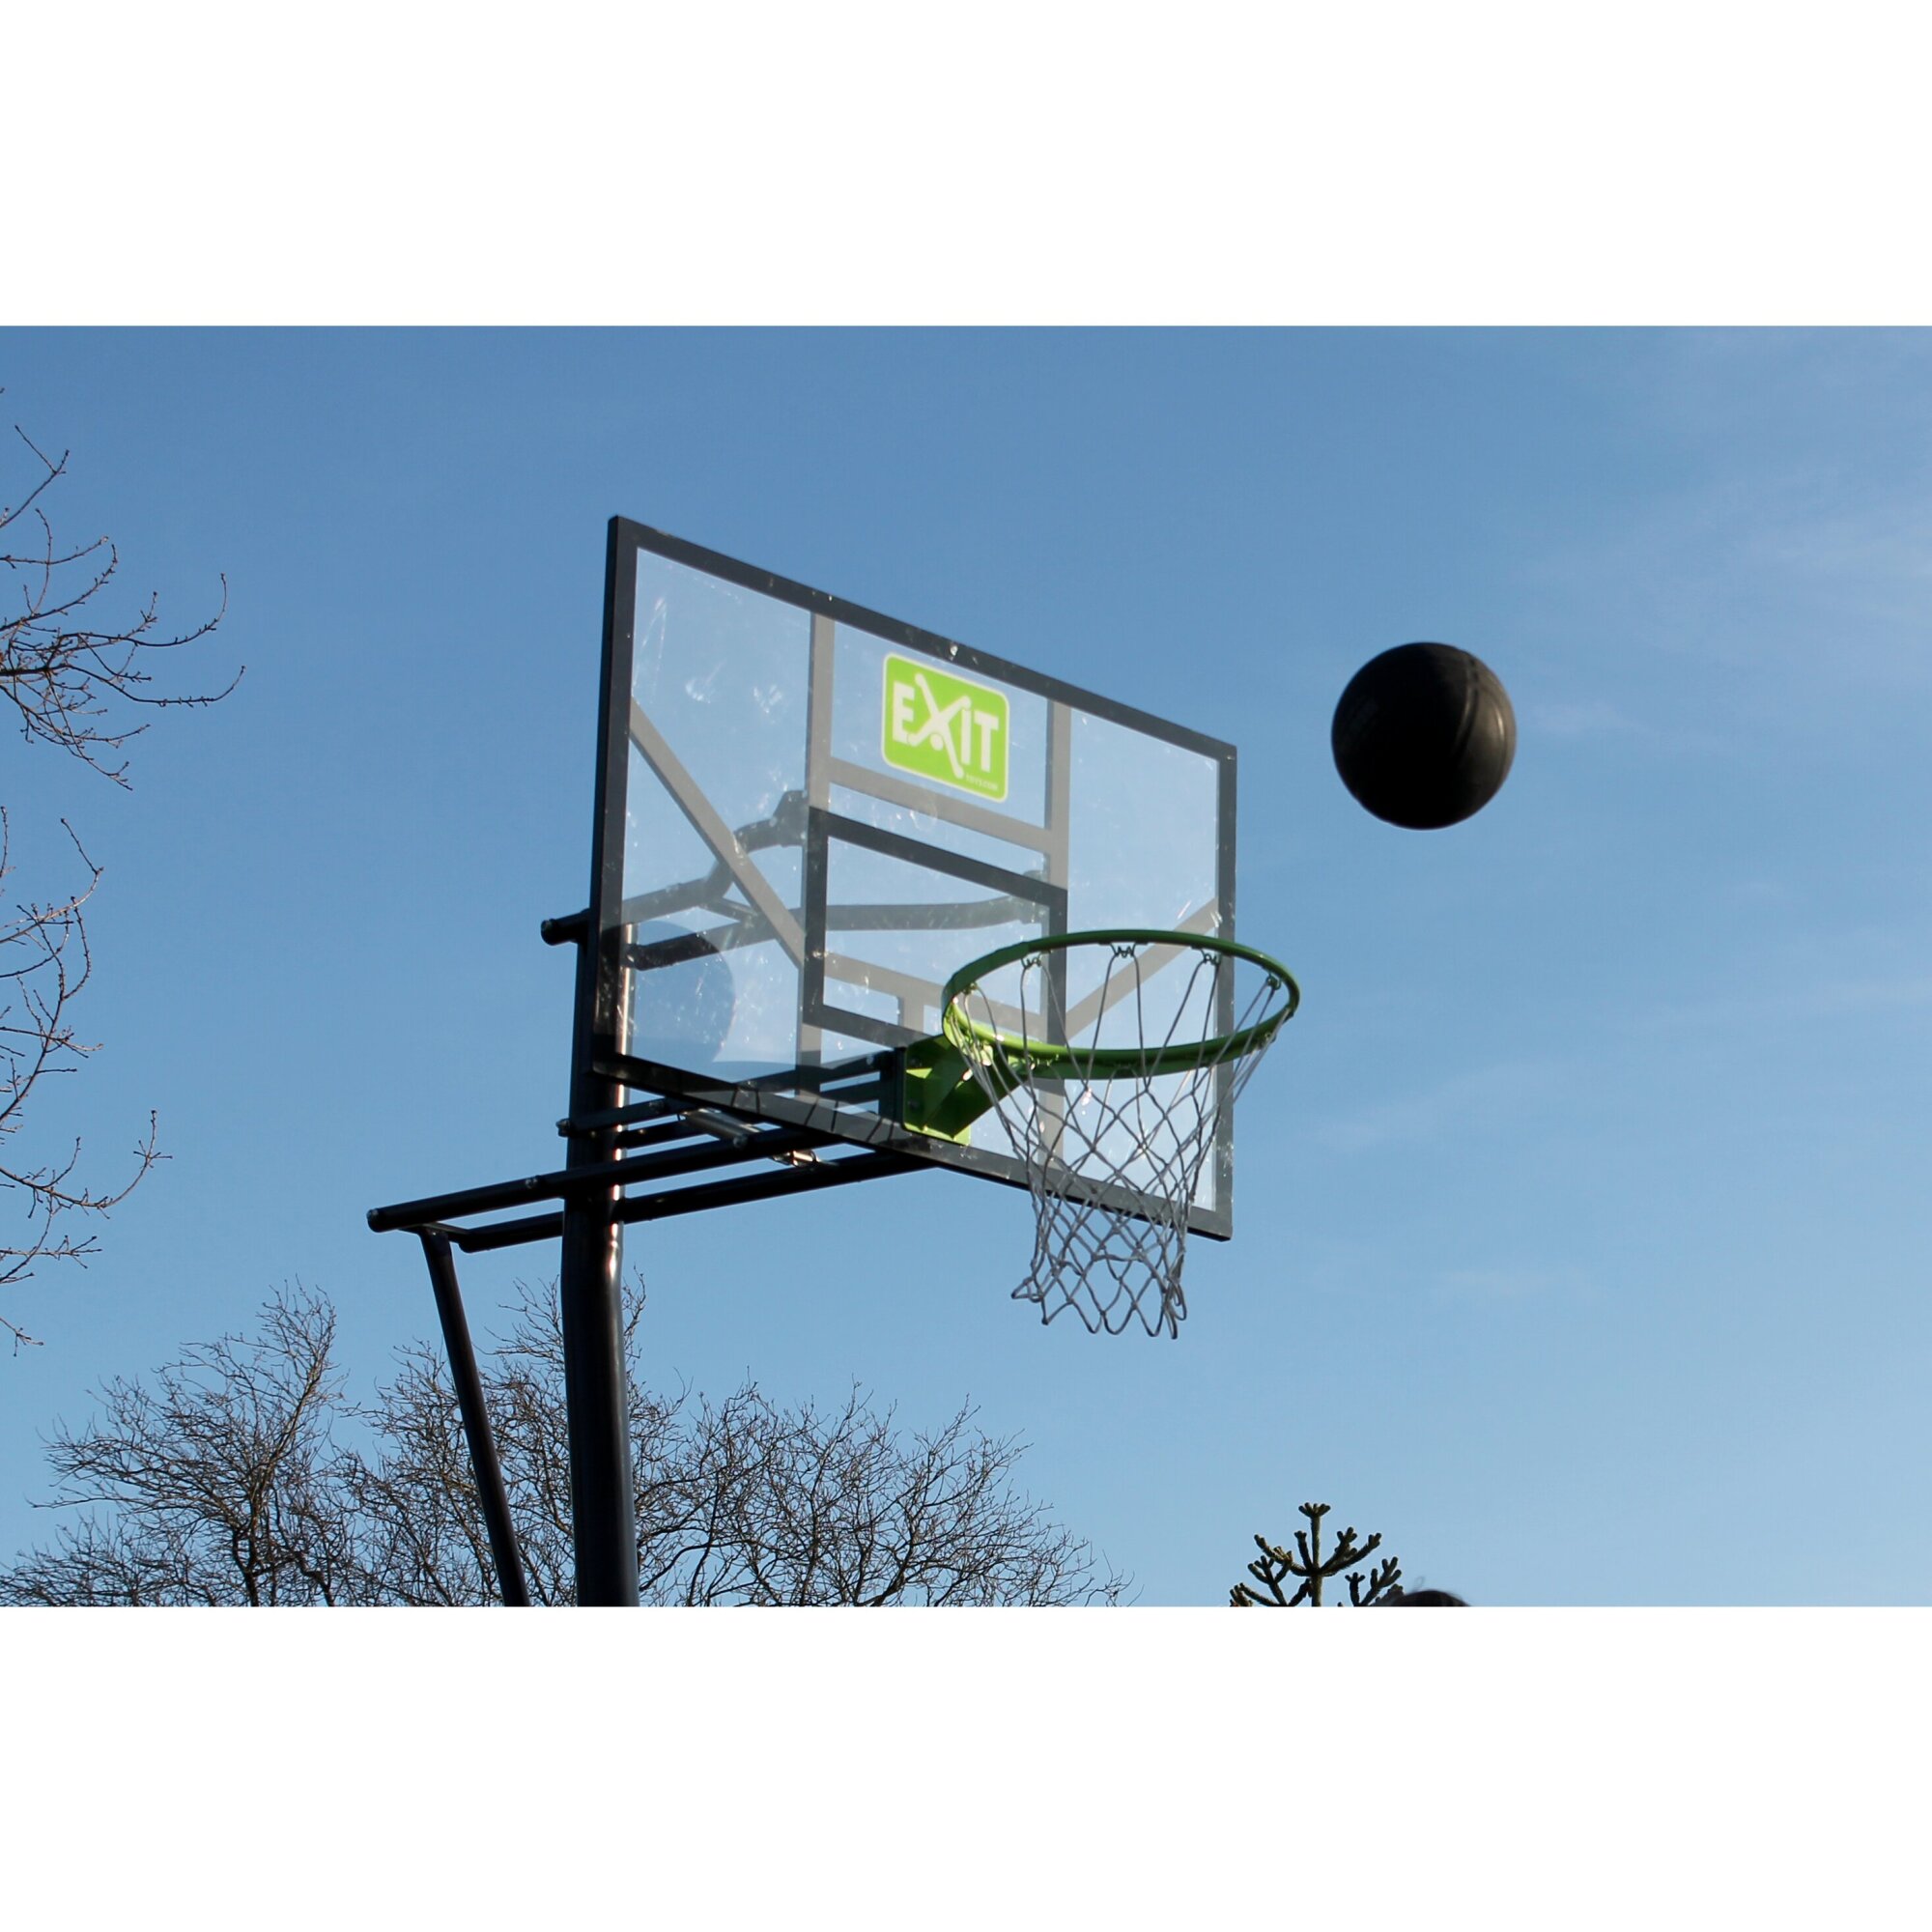 Exit Galaxy Basketballkorb grün-schwarz Outdoor